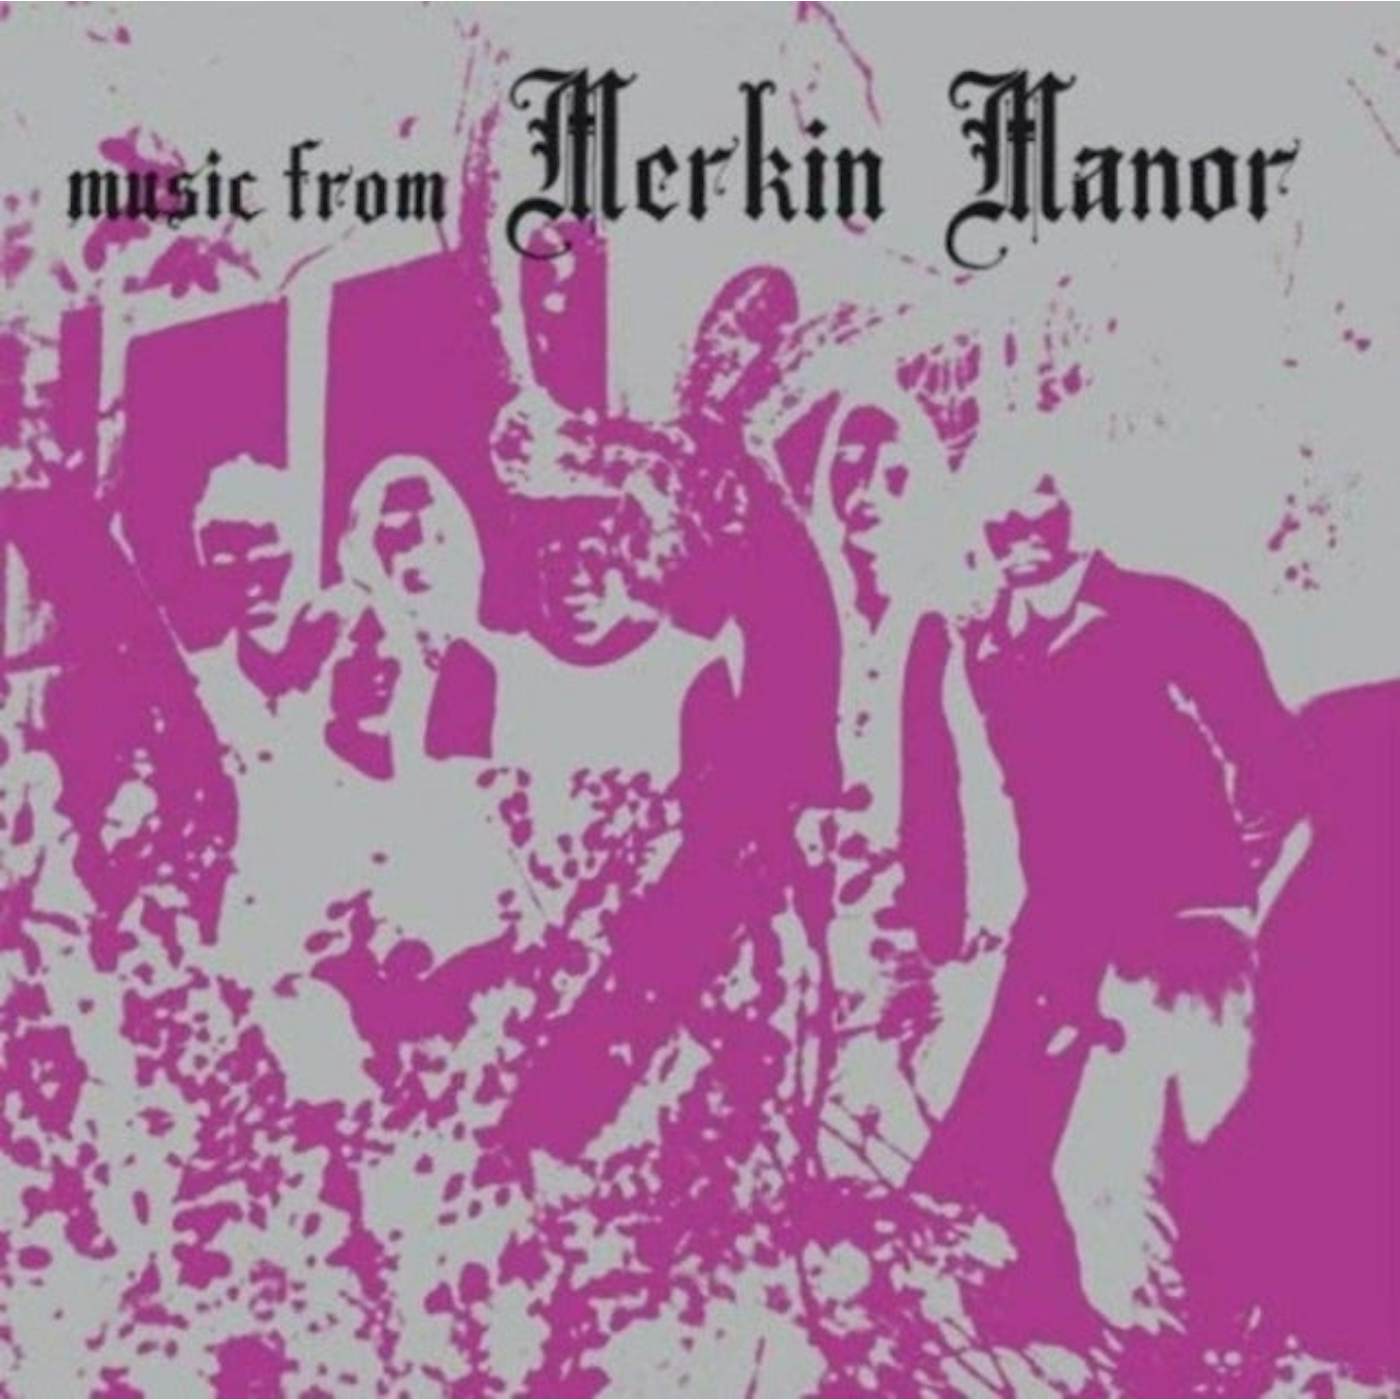 Merkin LP - Music From Merkin Manor (Vinyl)